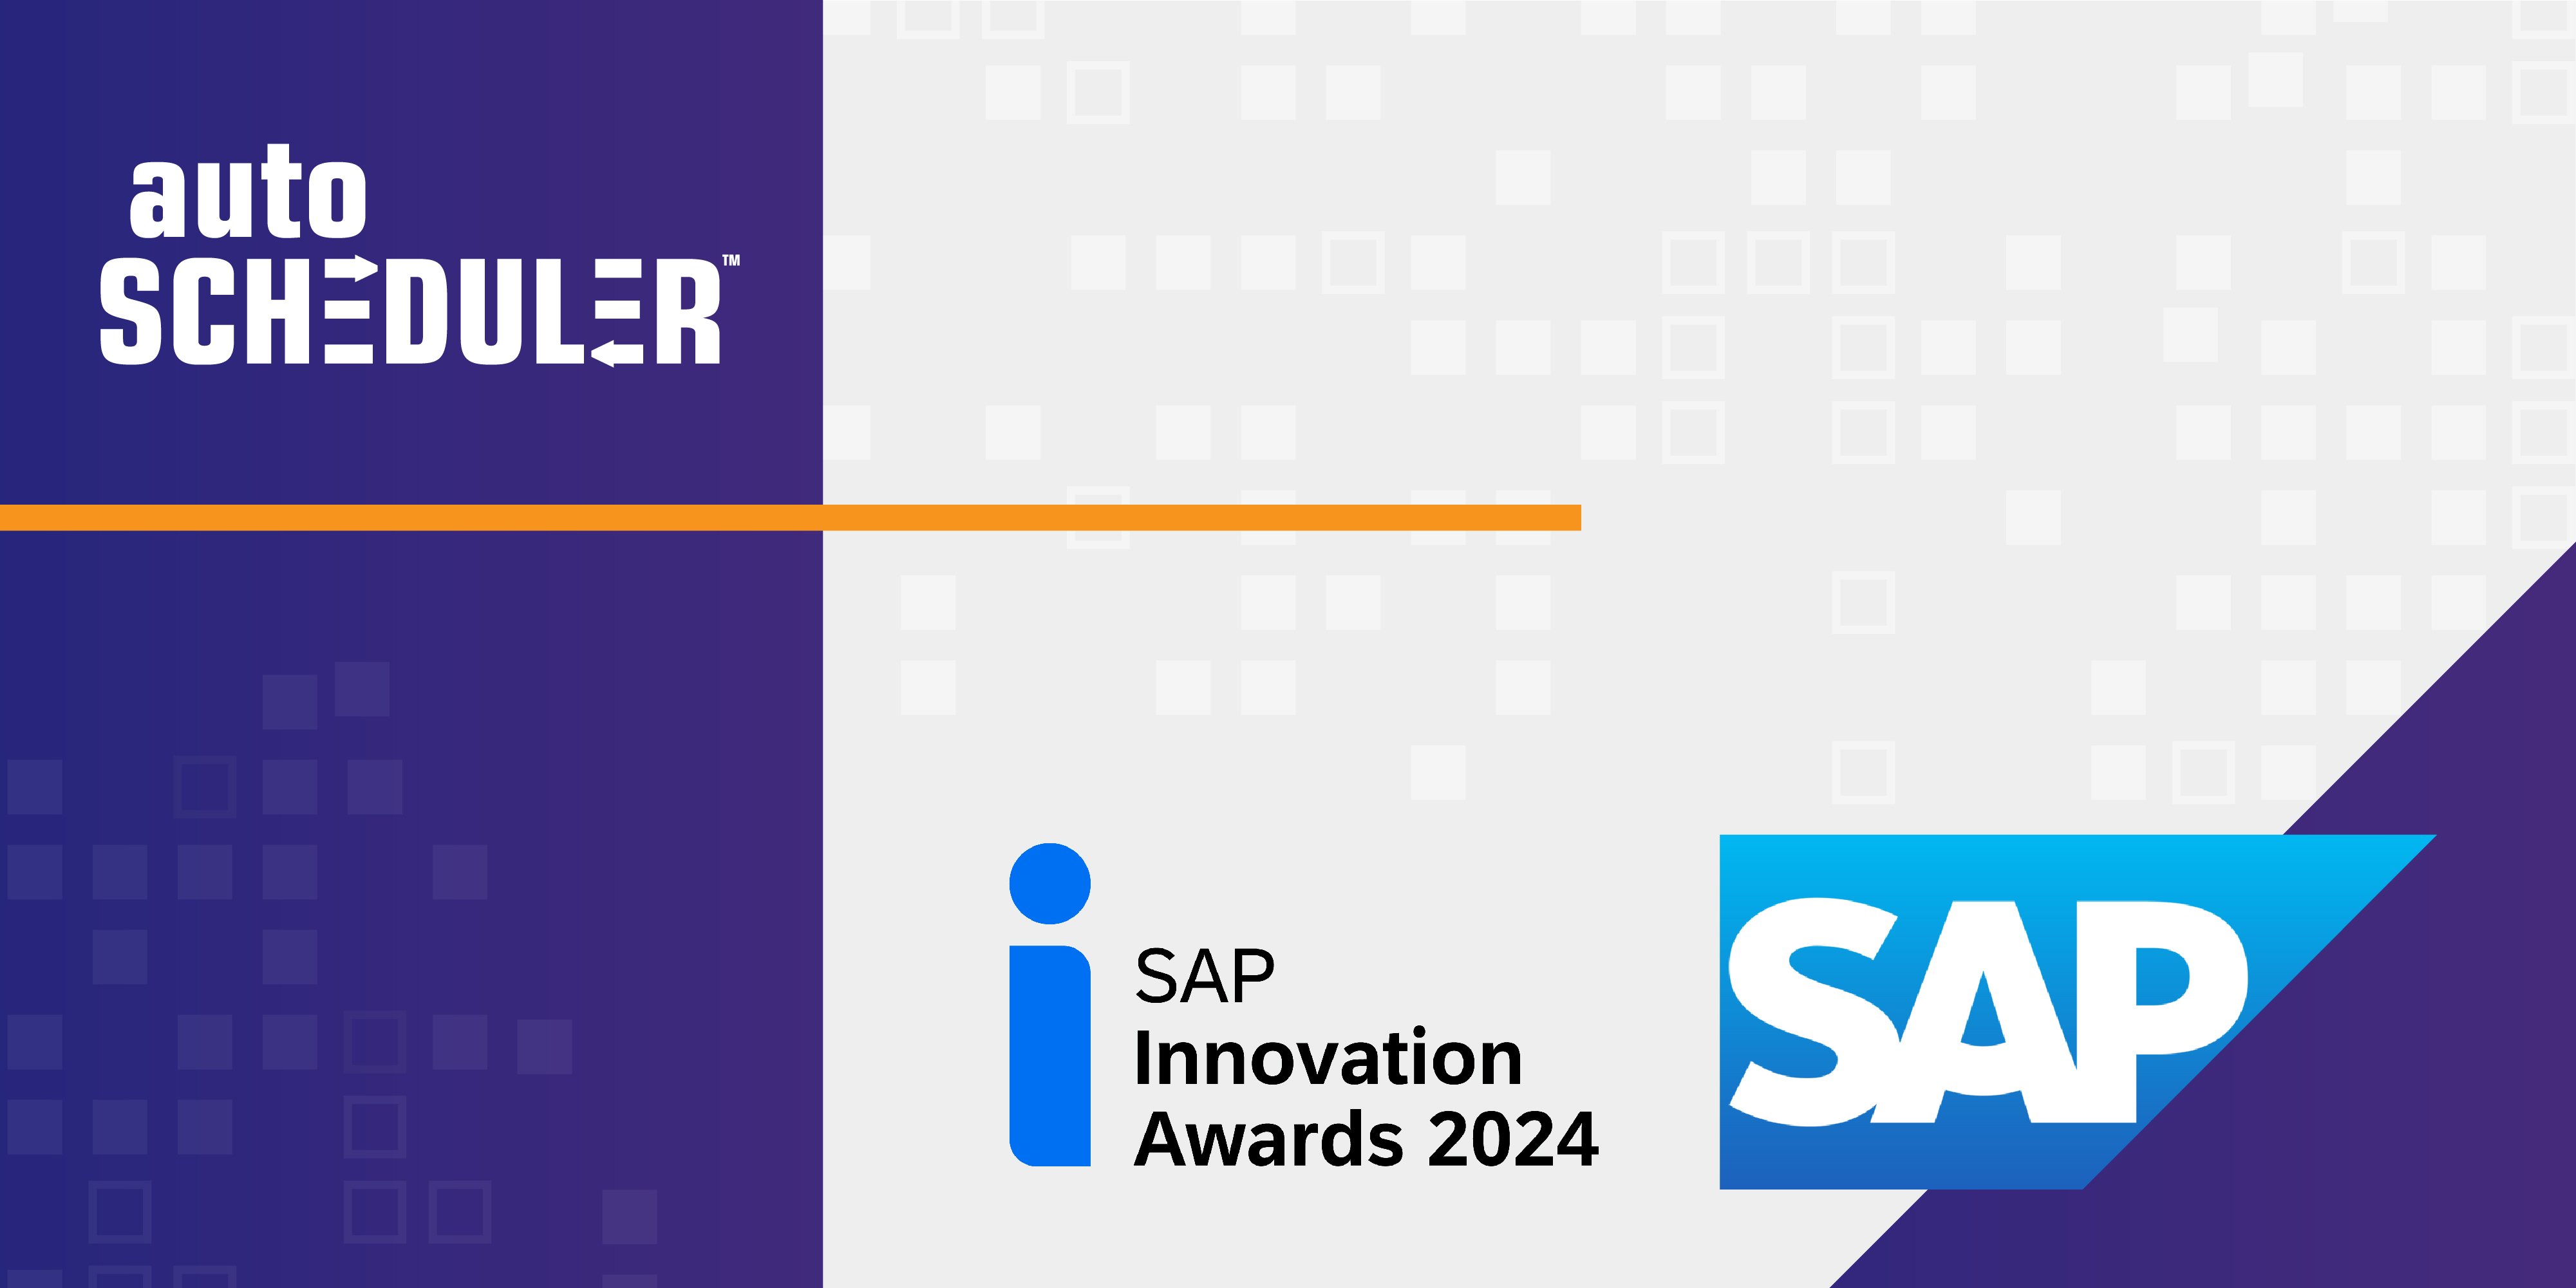 AutoScheduler Named Winner of the SAP Innovation Awards 2024